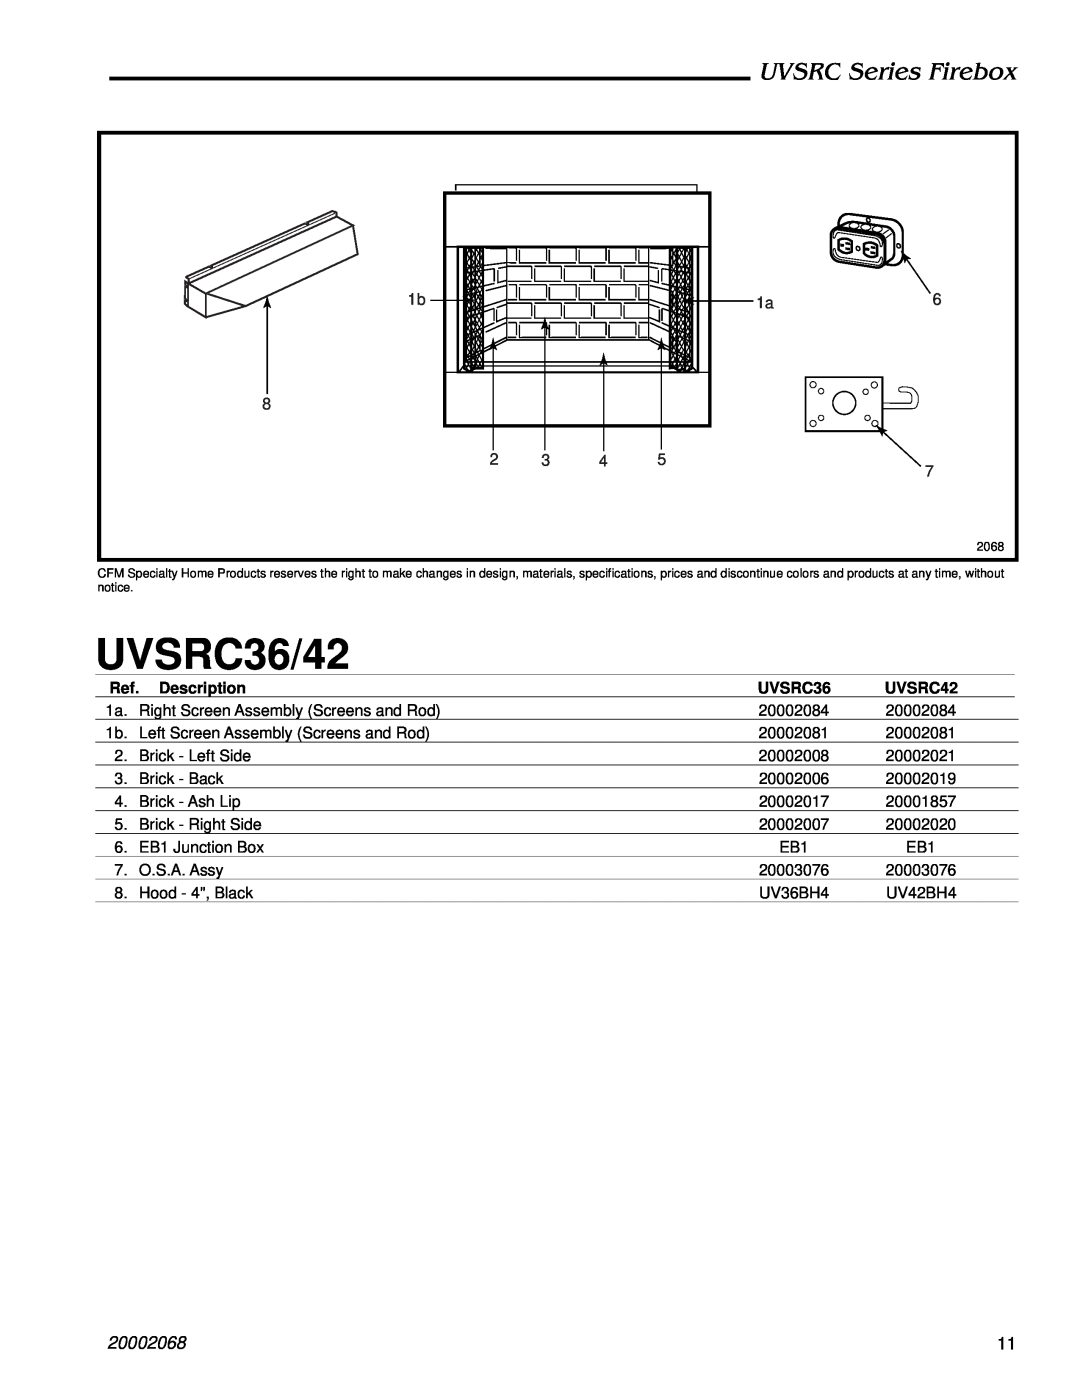 Majestic Appliances dimensions UVSRC36/42, UVSRC Series Firebox, 20002068, 2 3, Ref. Description, UVSRC42 